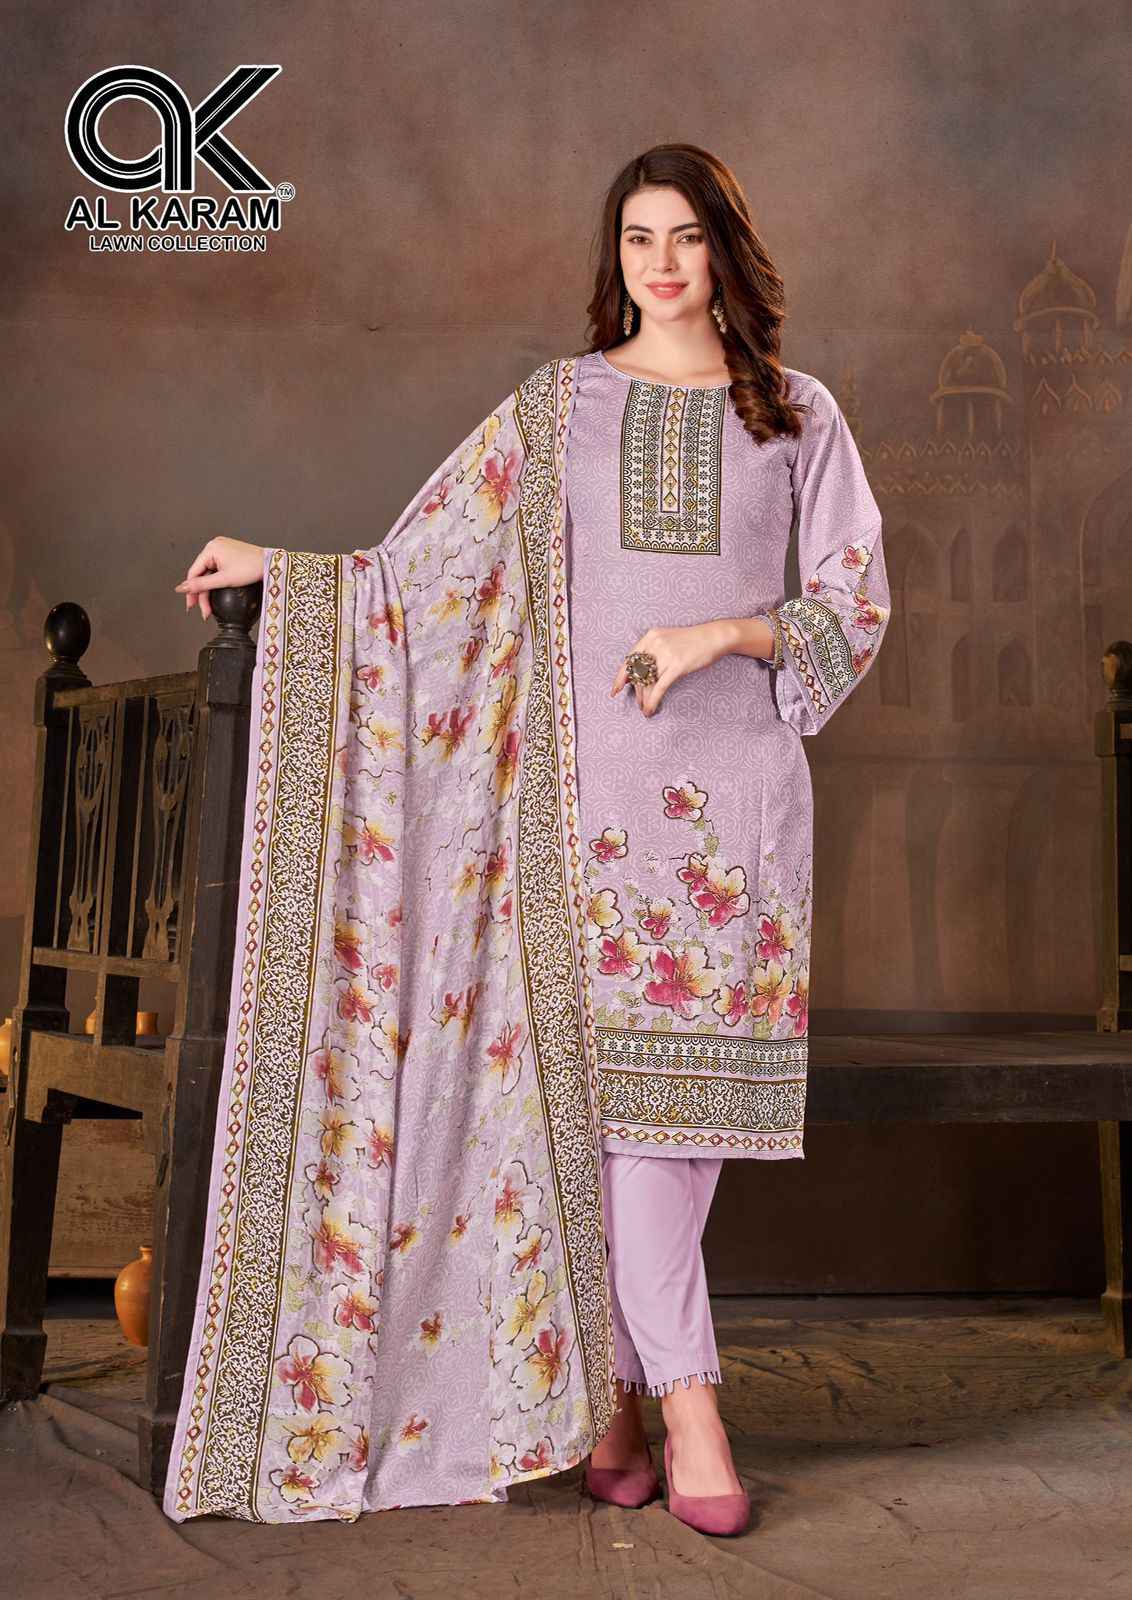 Al Karam Mahe Ruh Pure Soft Cotton Dress Material (8 pcs Catalogue)